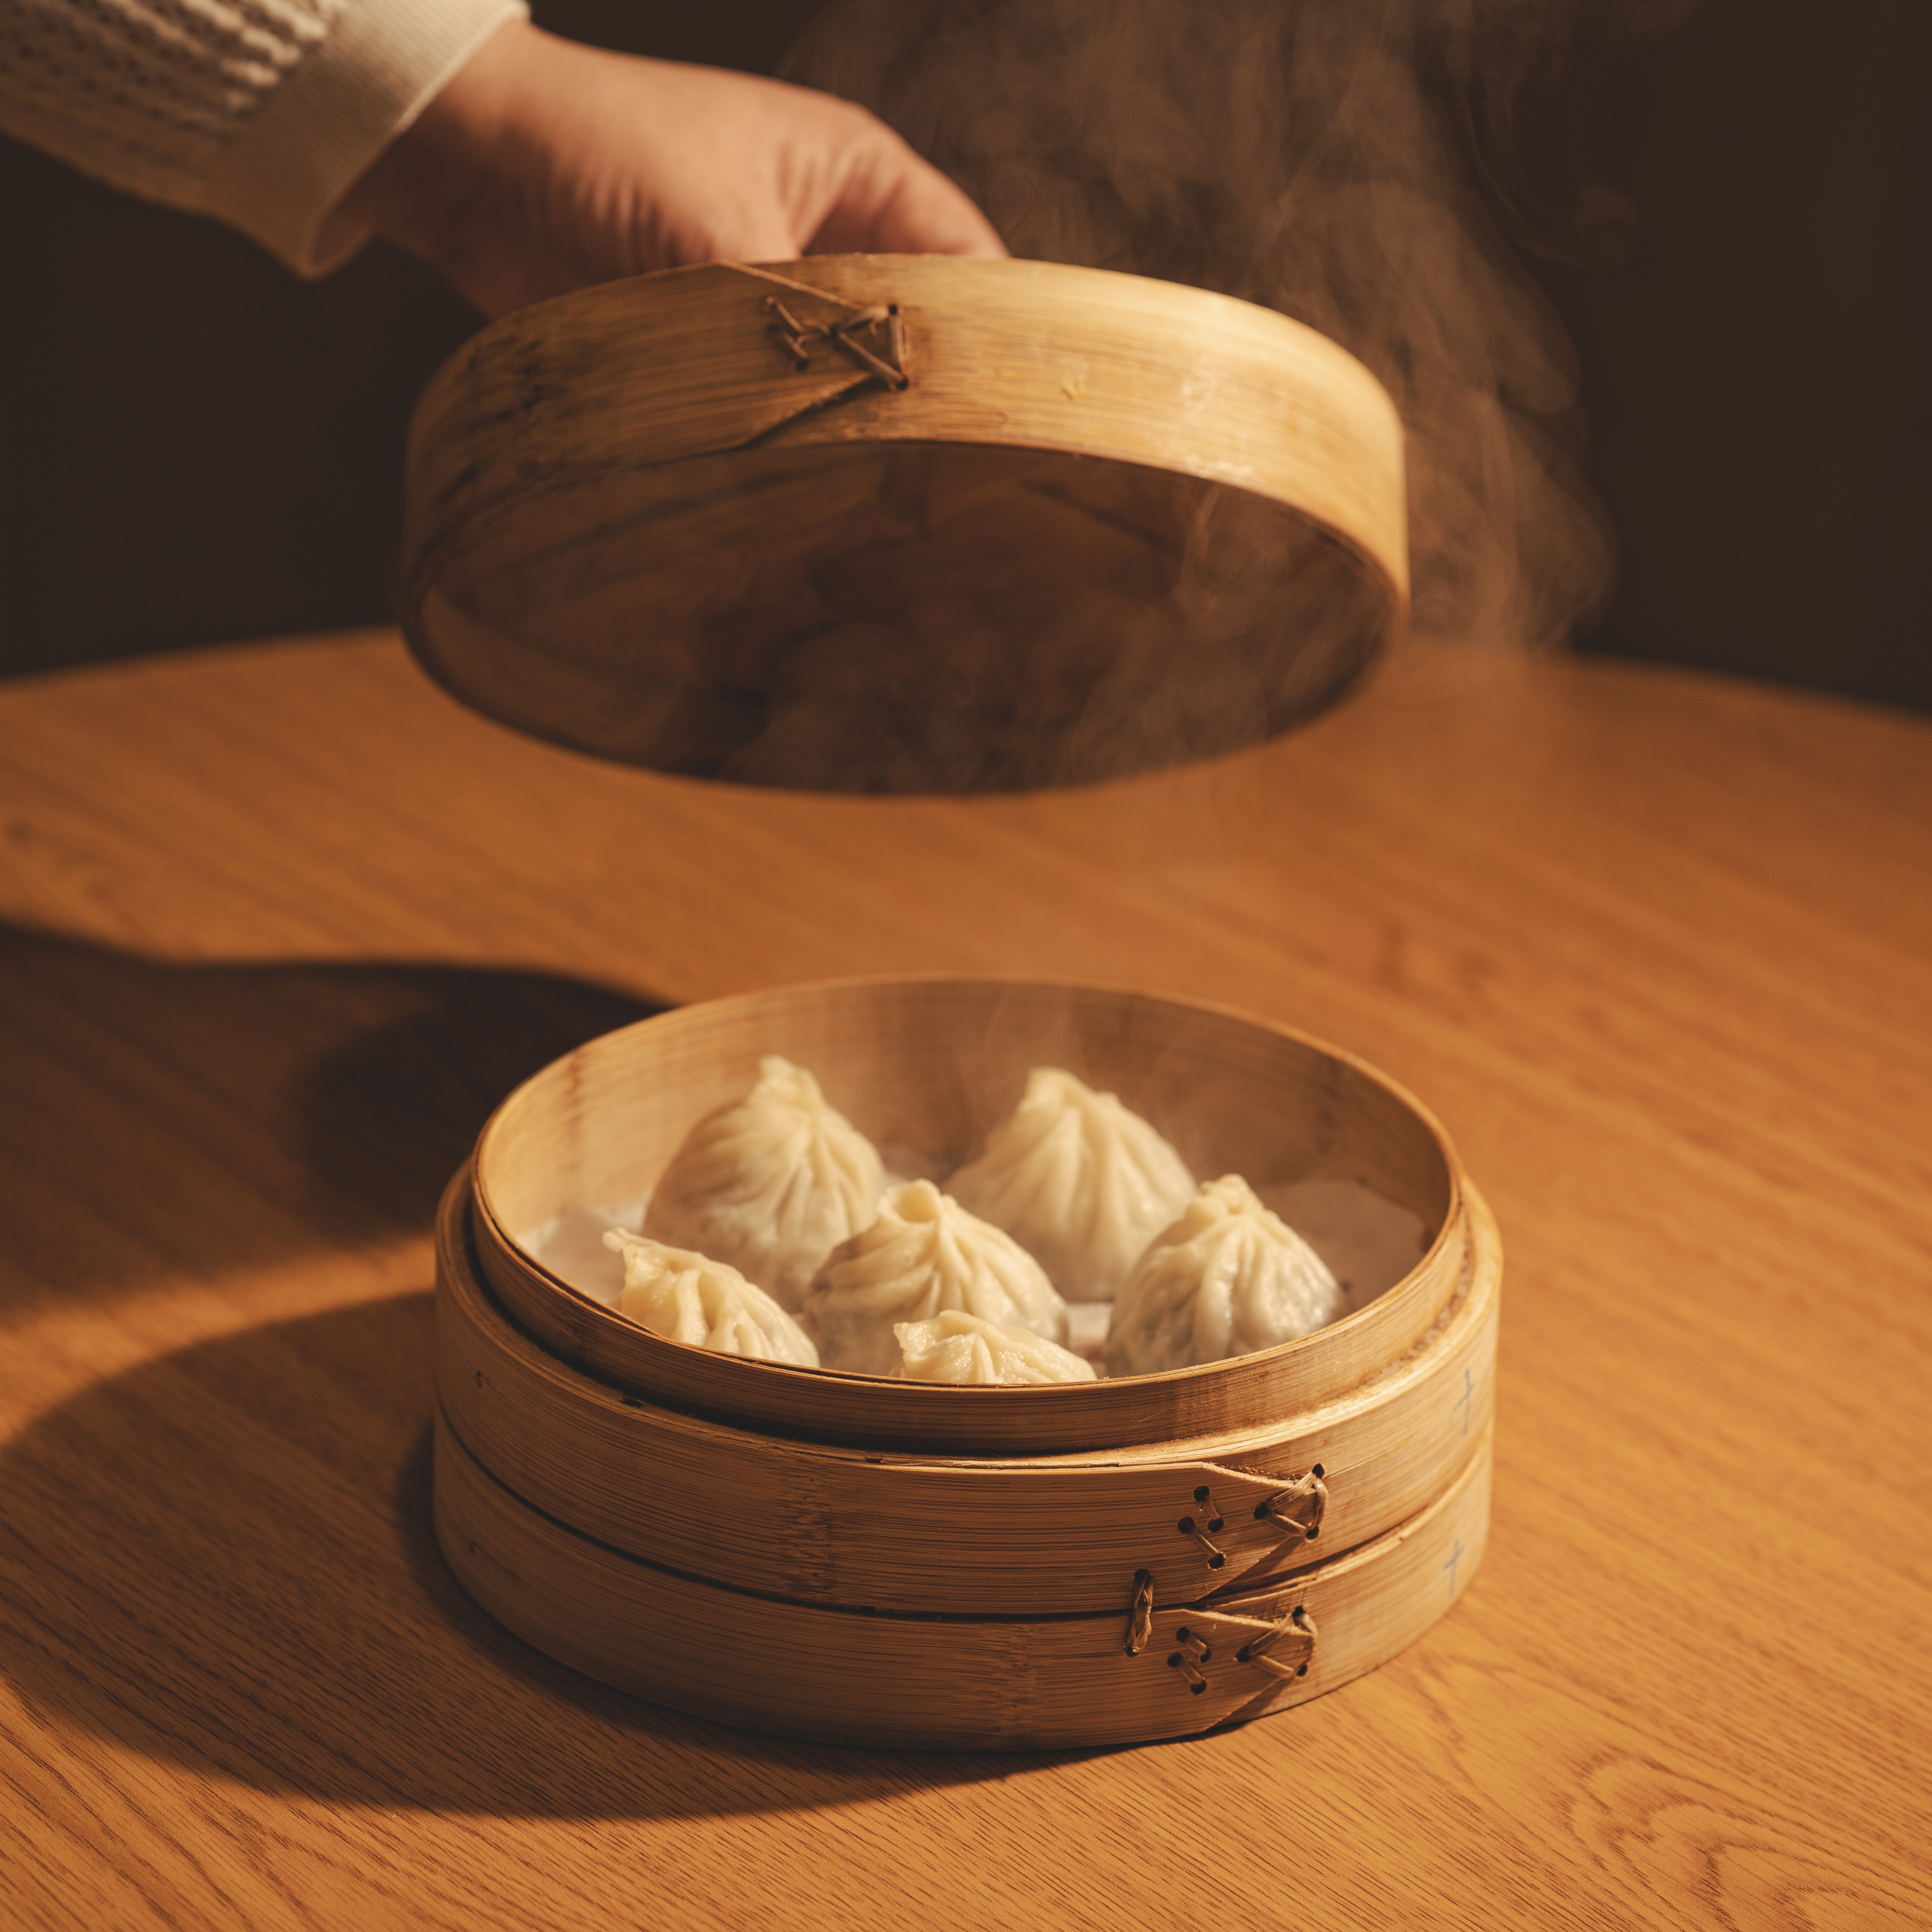 six dumpling in bamboo steamer.